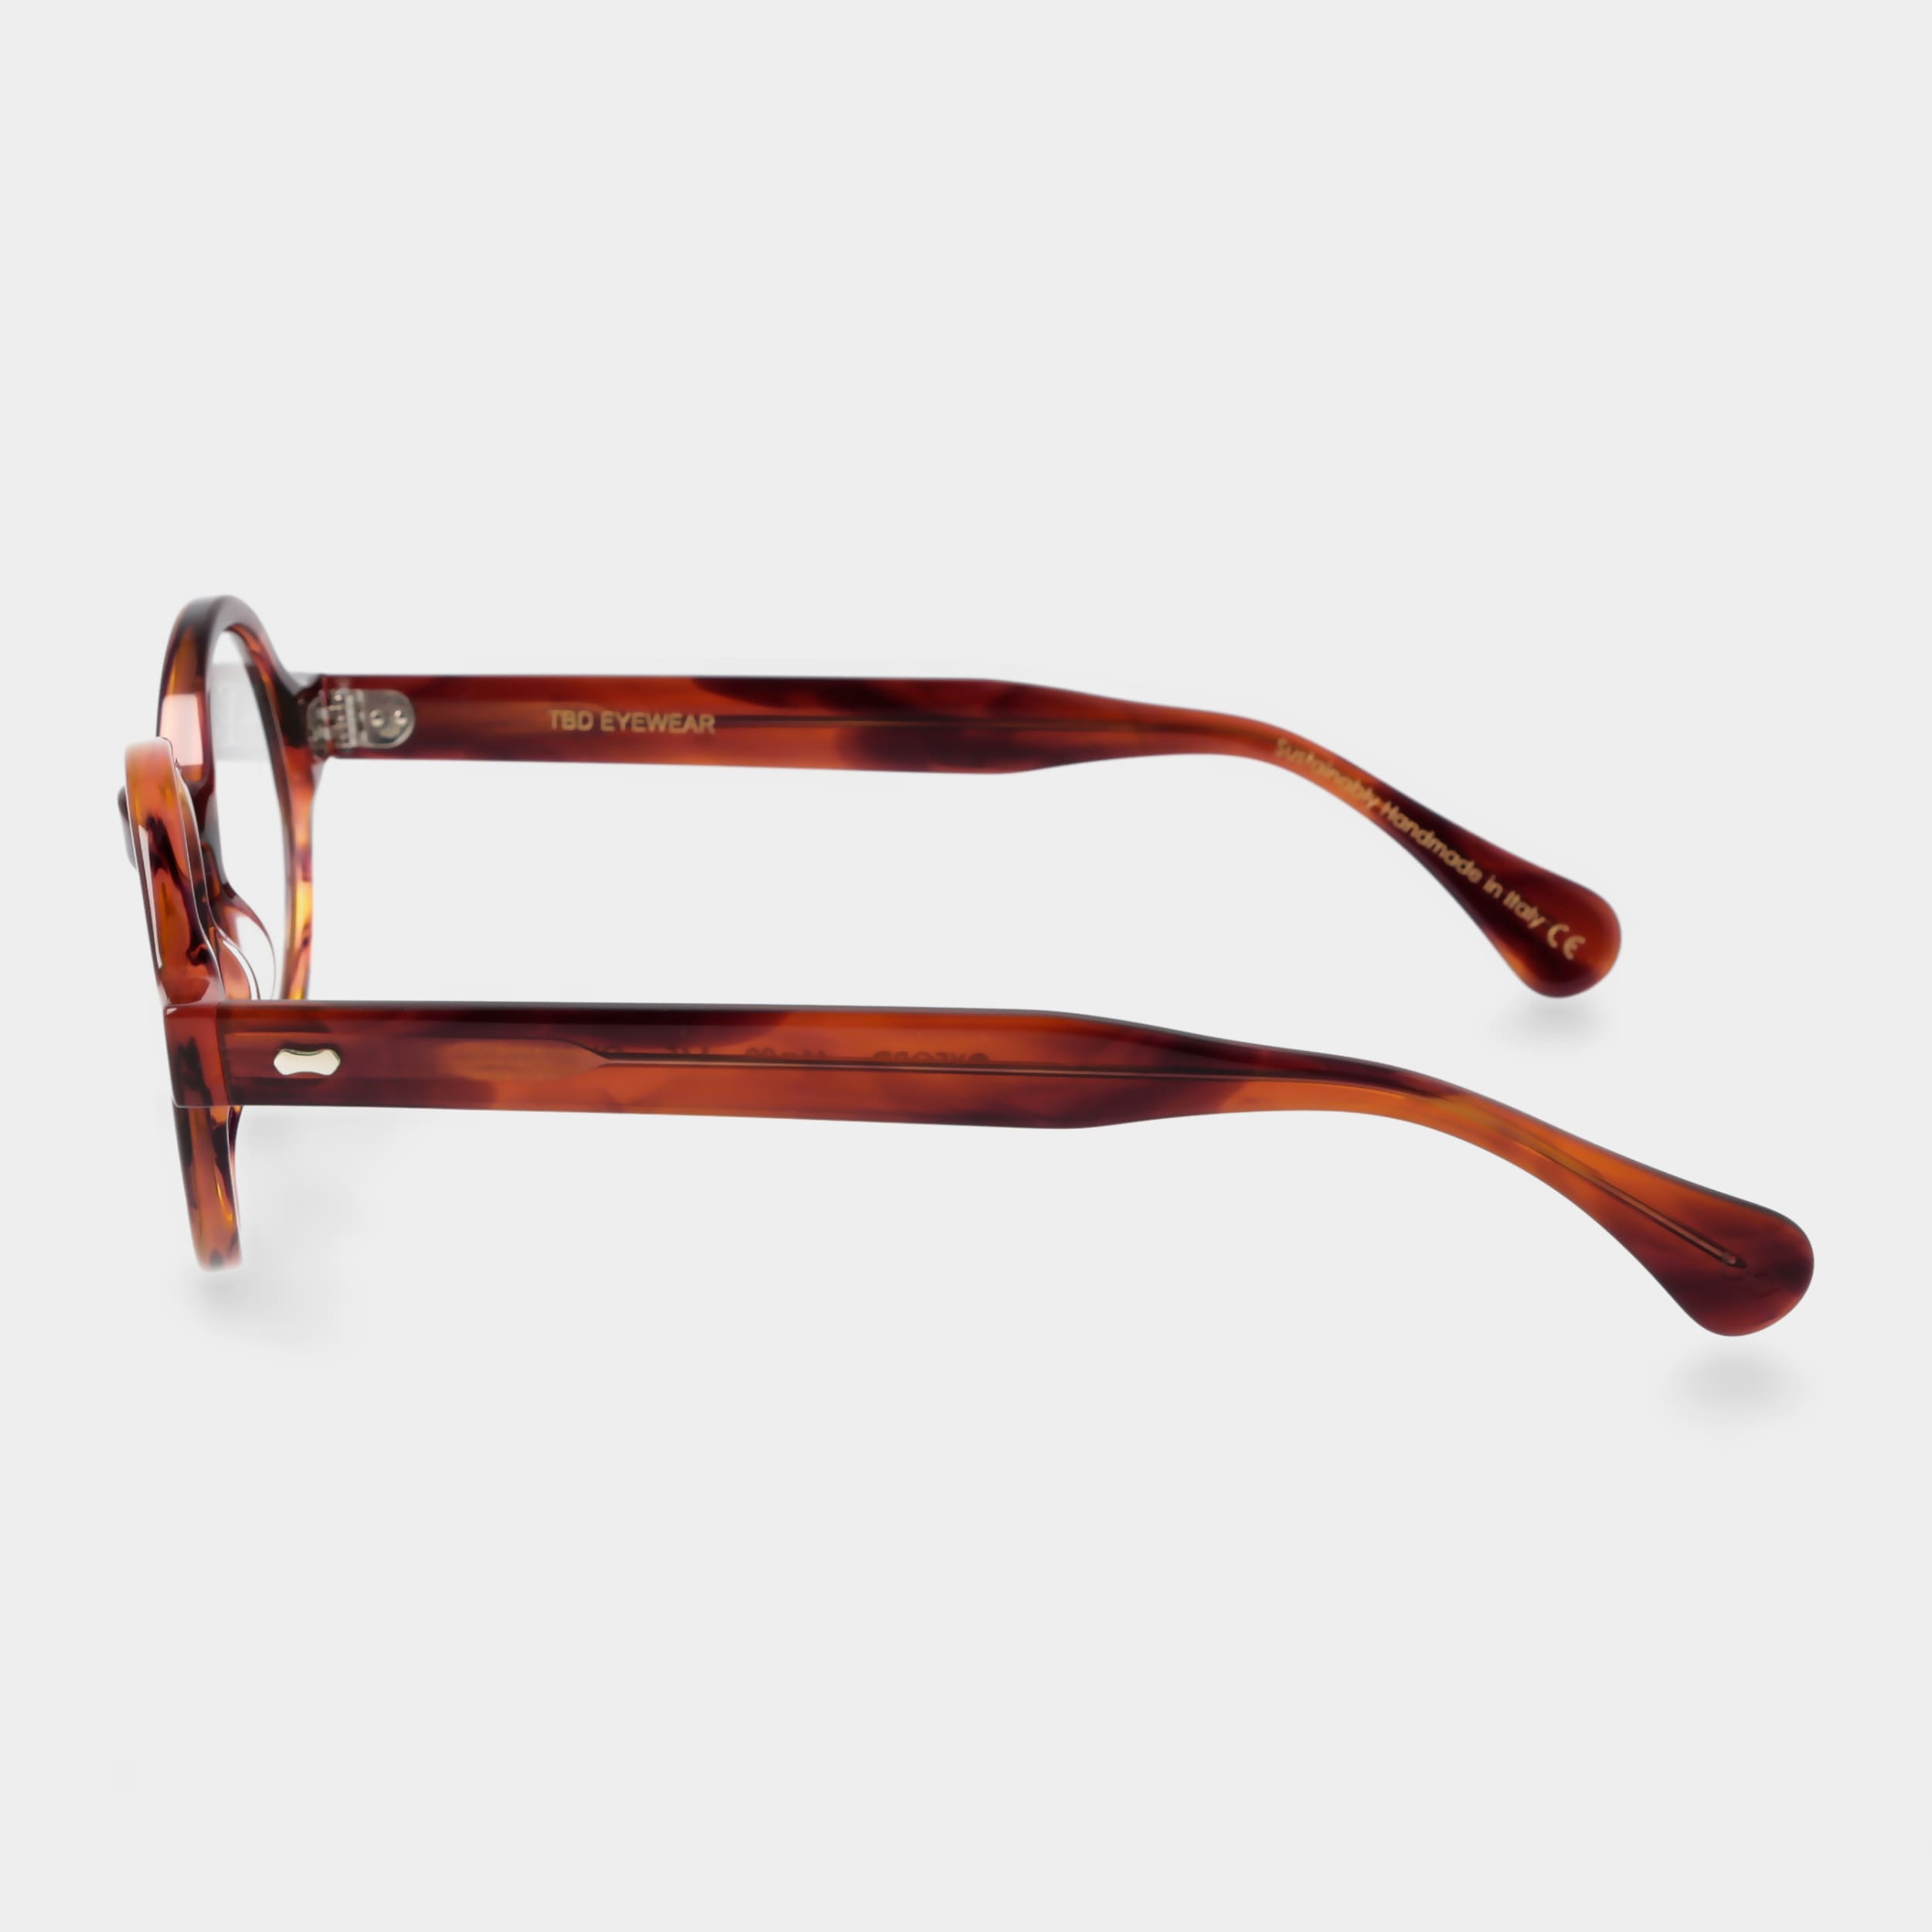 eyeglasses-oxford-havana-optical-tbd-eyewear-lateral